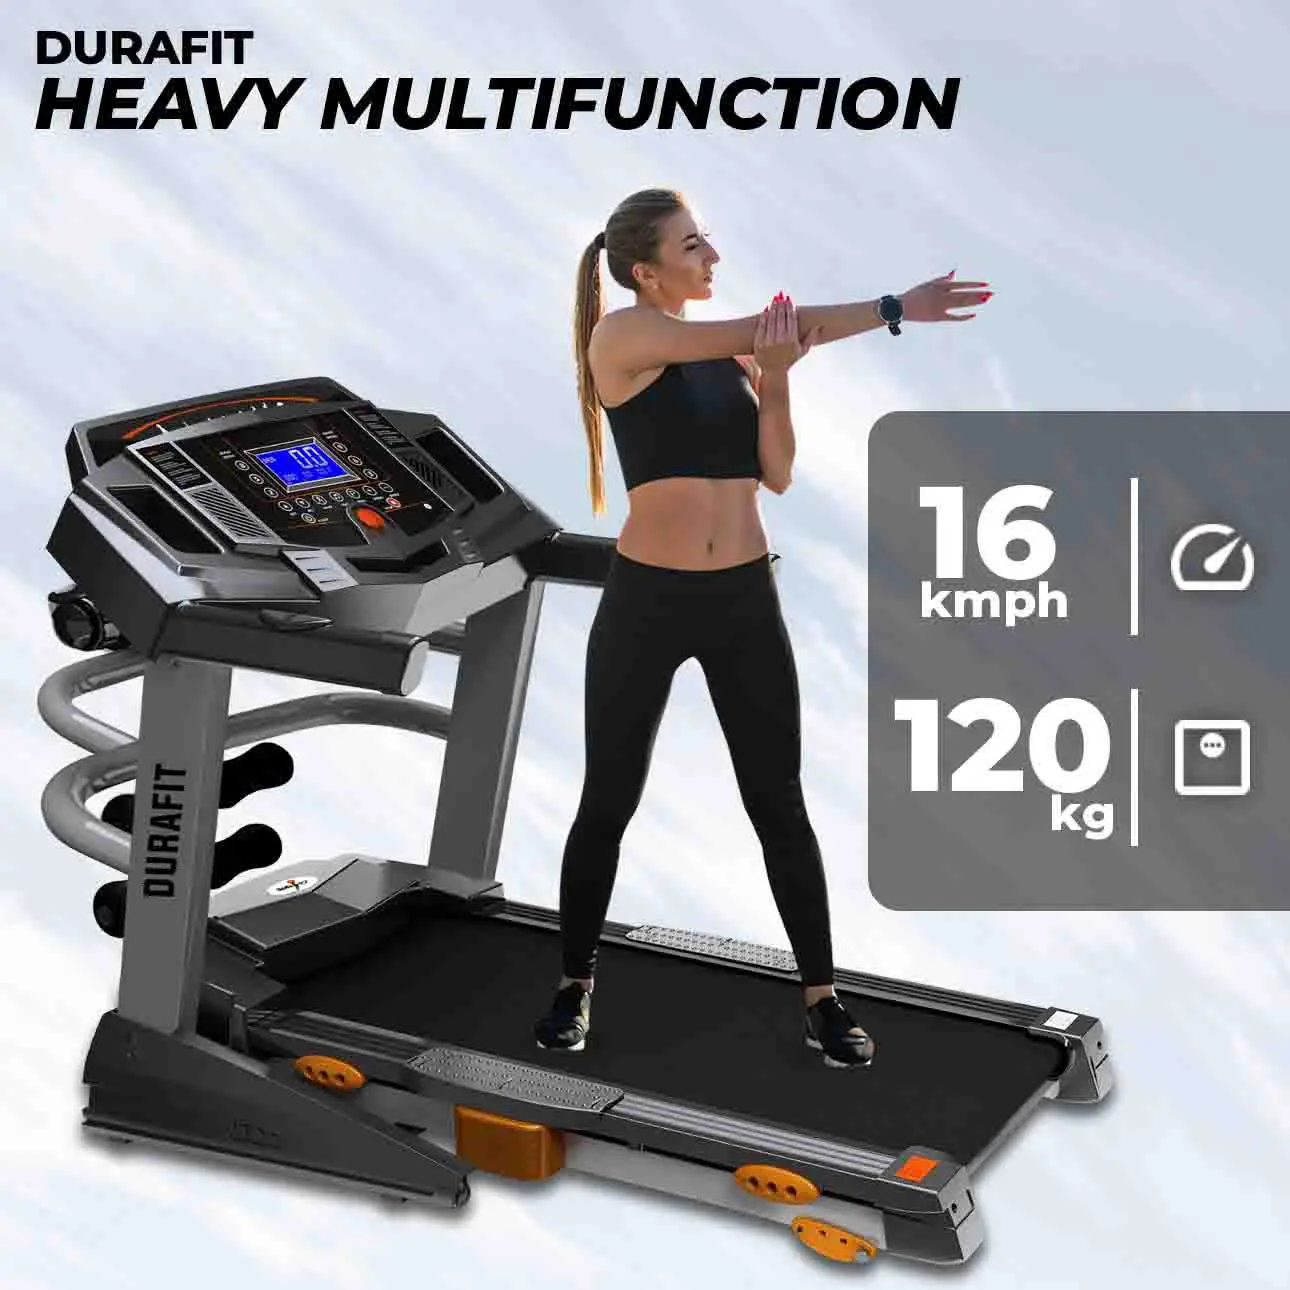 Durafit Heavy Multifunction Treadmill